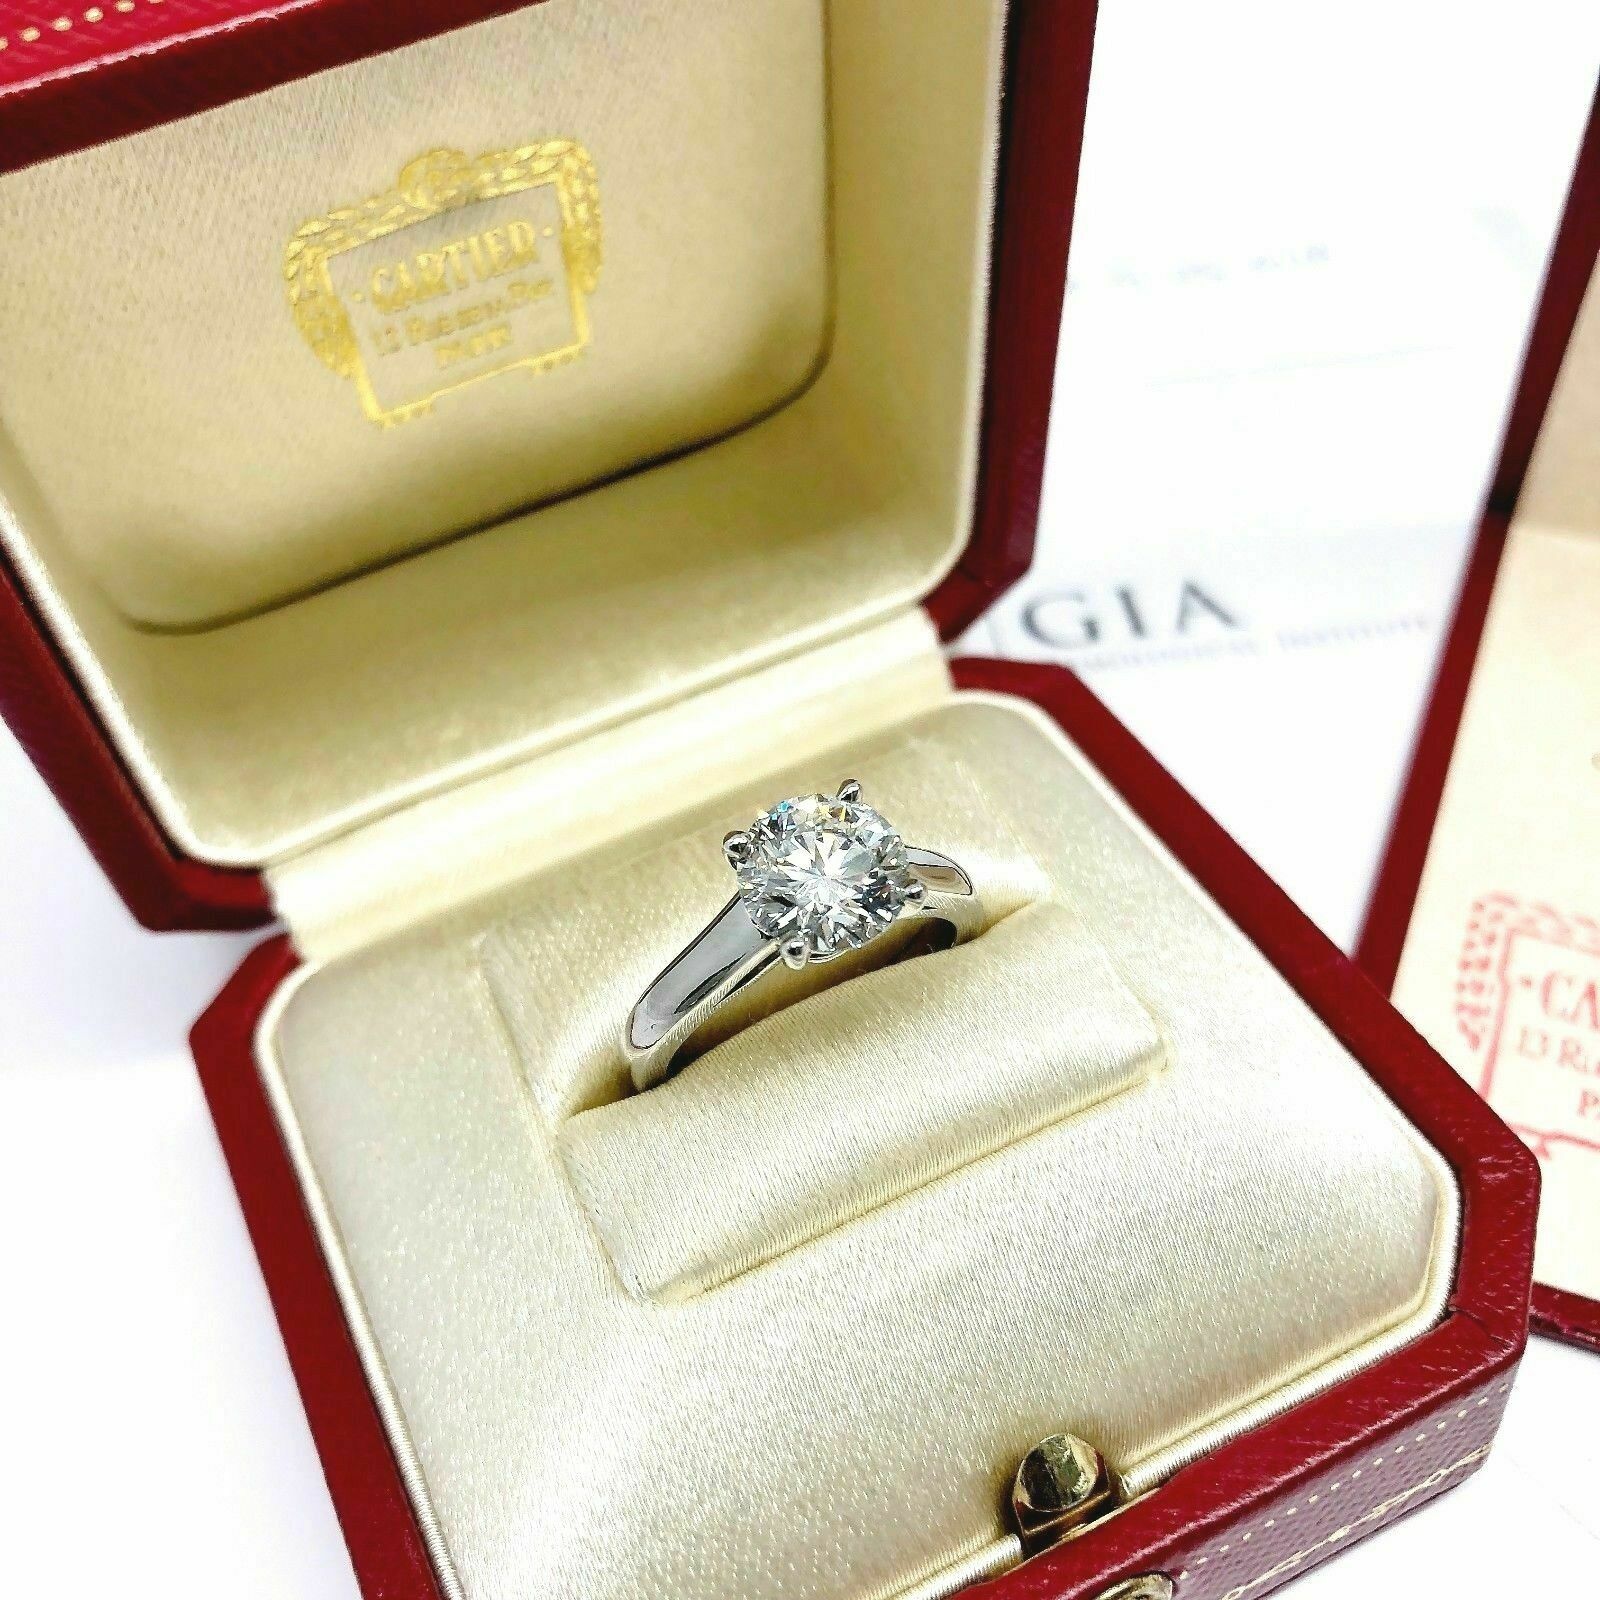 Radiance on Auction: Bonhams to Offer $100K Cartier Diamond Ring | Diamond  Registry